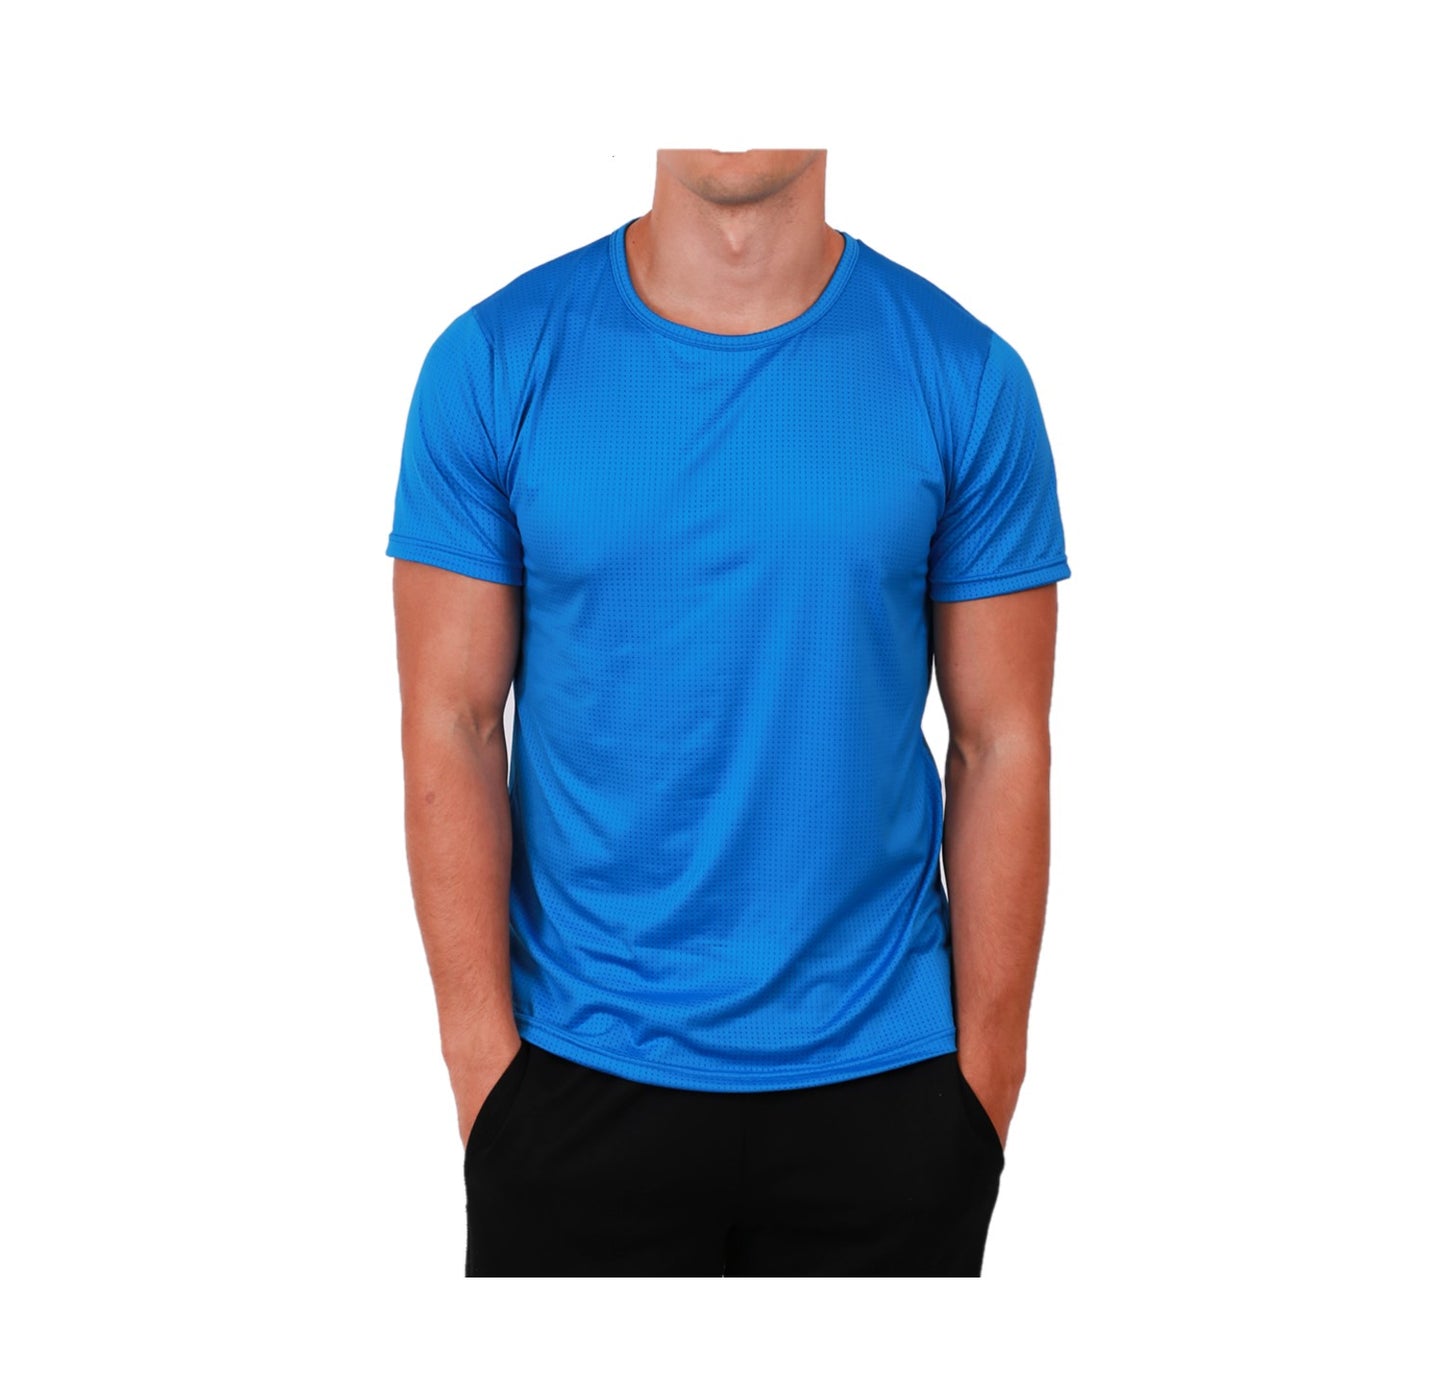 Men\'sWorkout Short Sleeve Dry TNO Fit Apparels – Top L.Blue